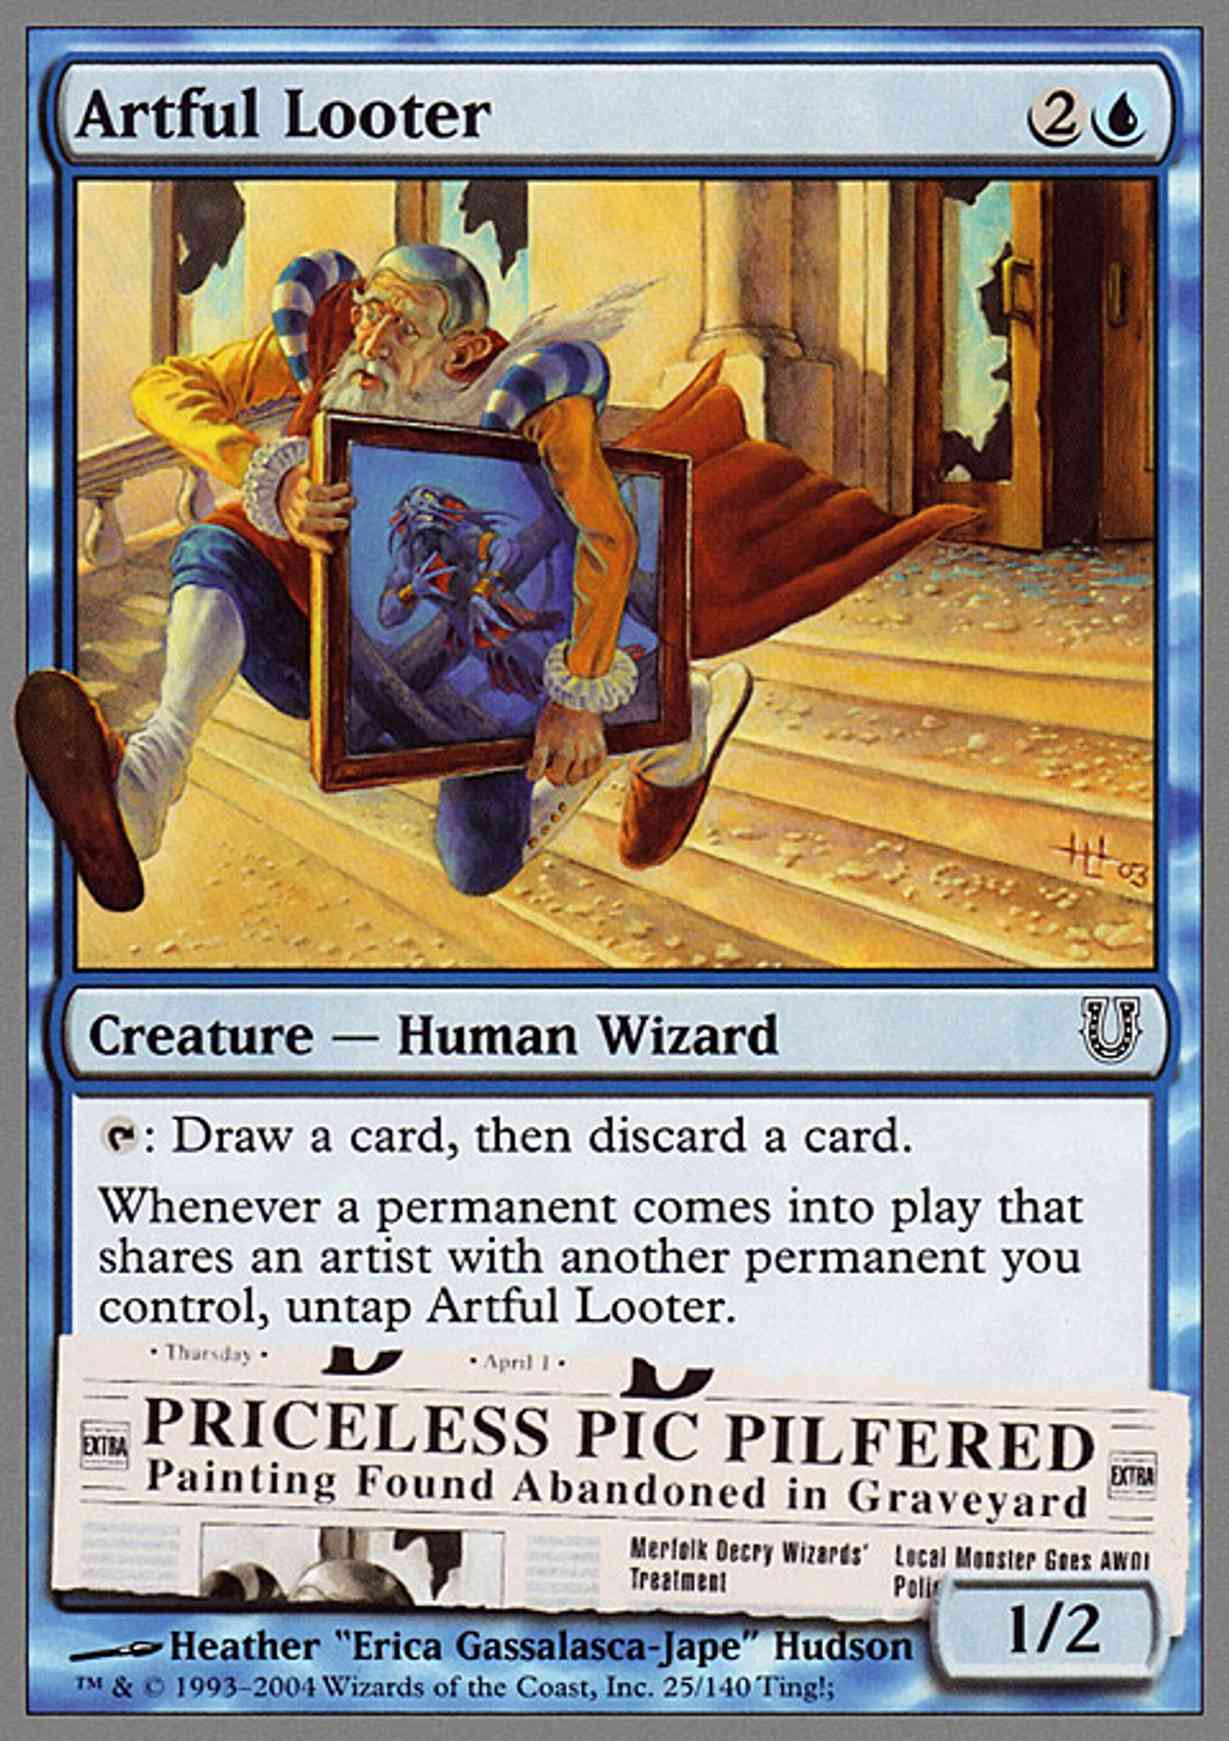 Artful Looter magic card front